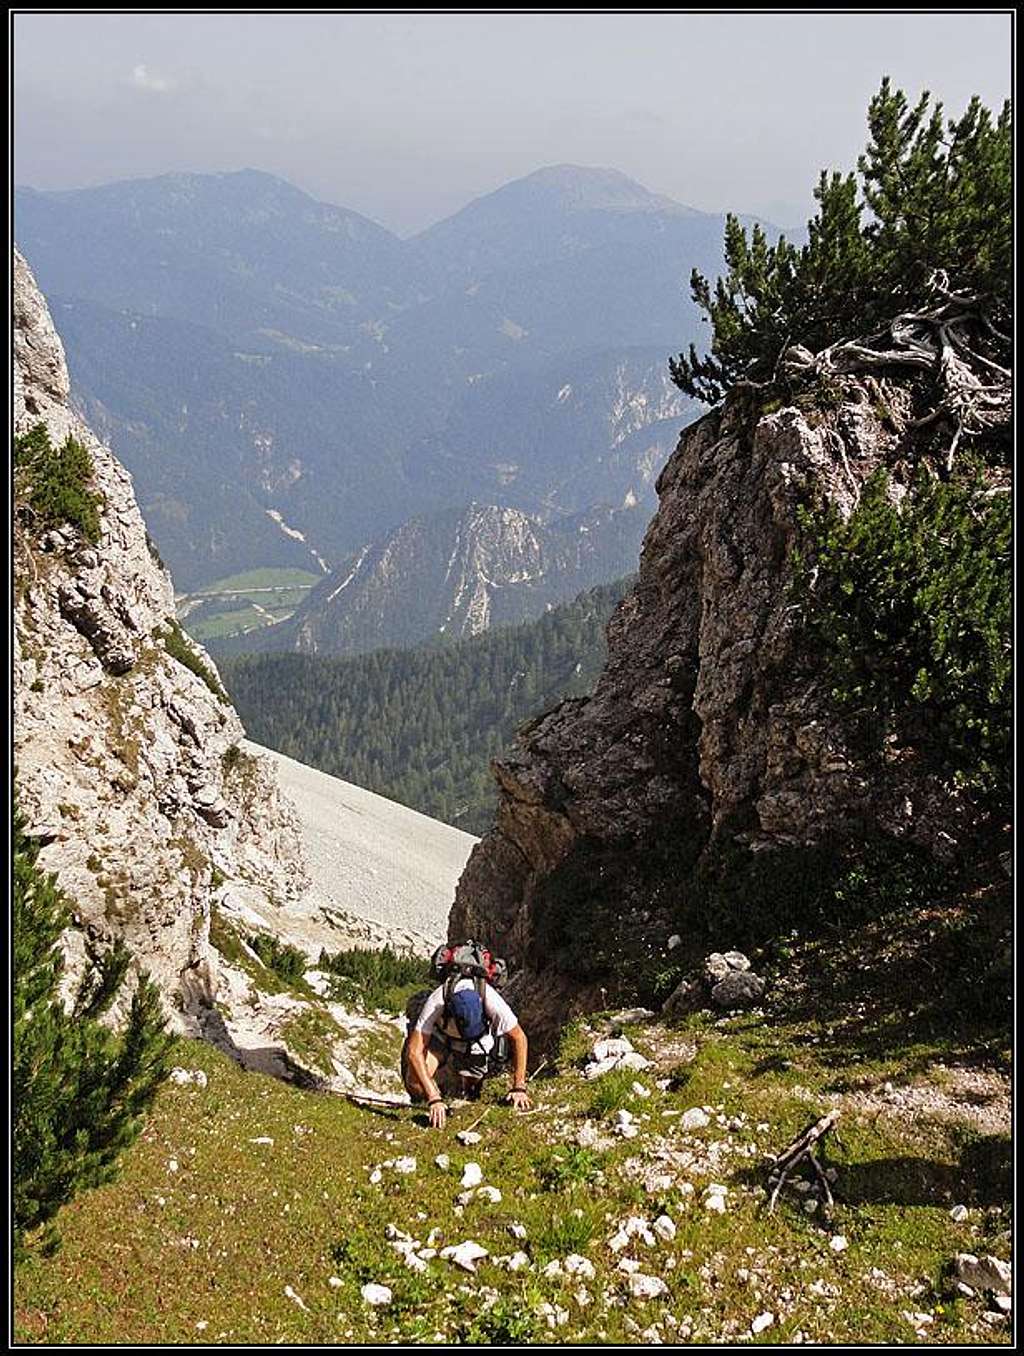 Reaching the south ridge of Iof di Miezegnot / Poldnasnja spica